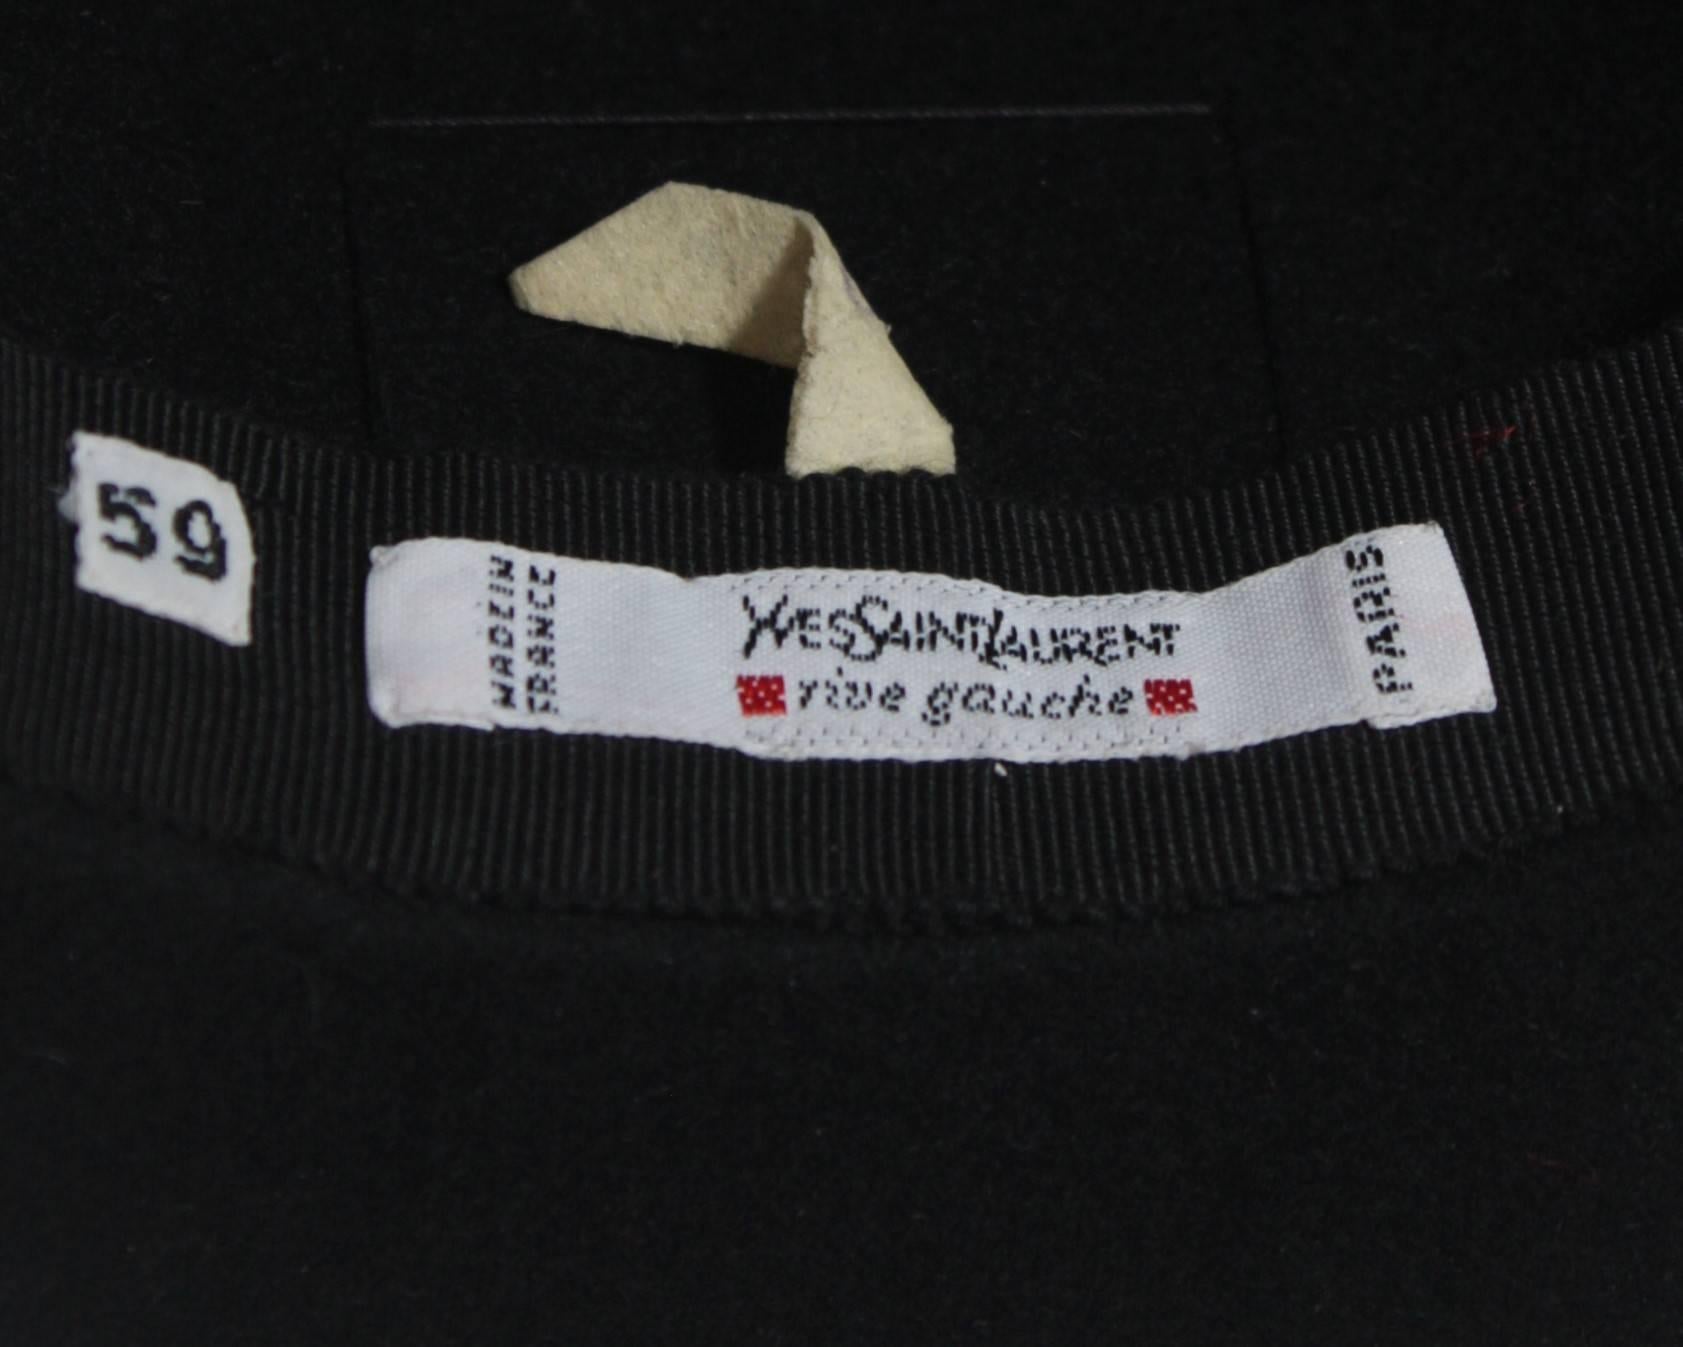 Yves Saint Laurent Rive Gauche 1980's Black Wool Felt Hat with Curved Brim 59 4